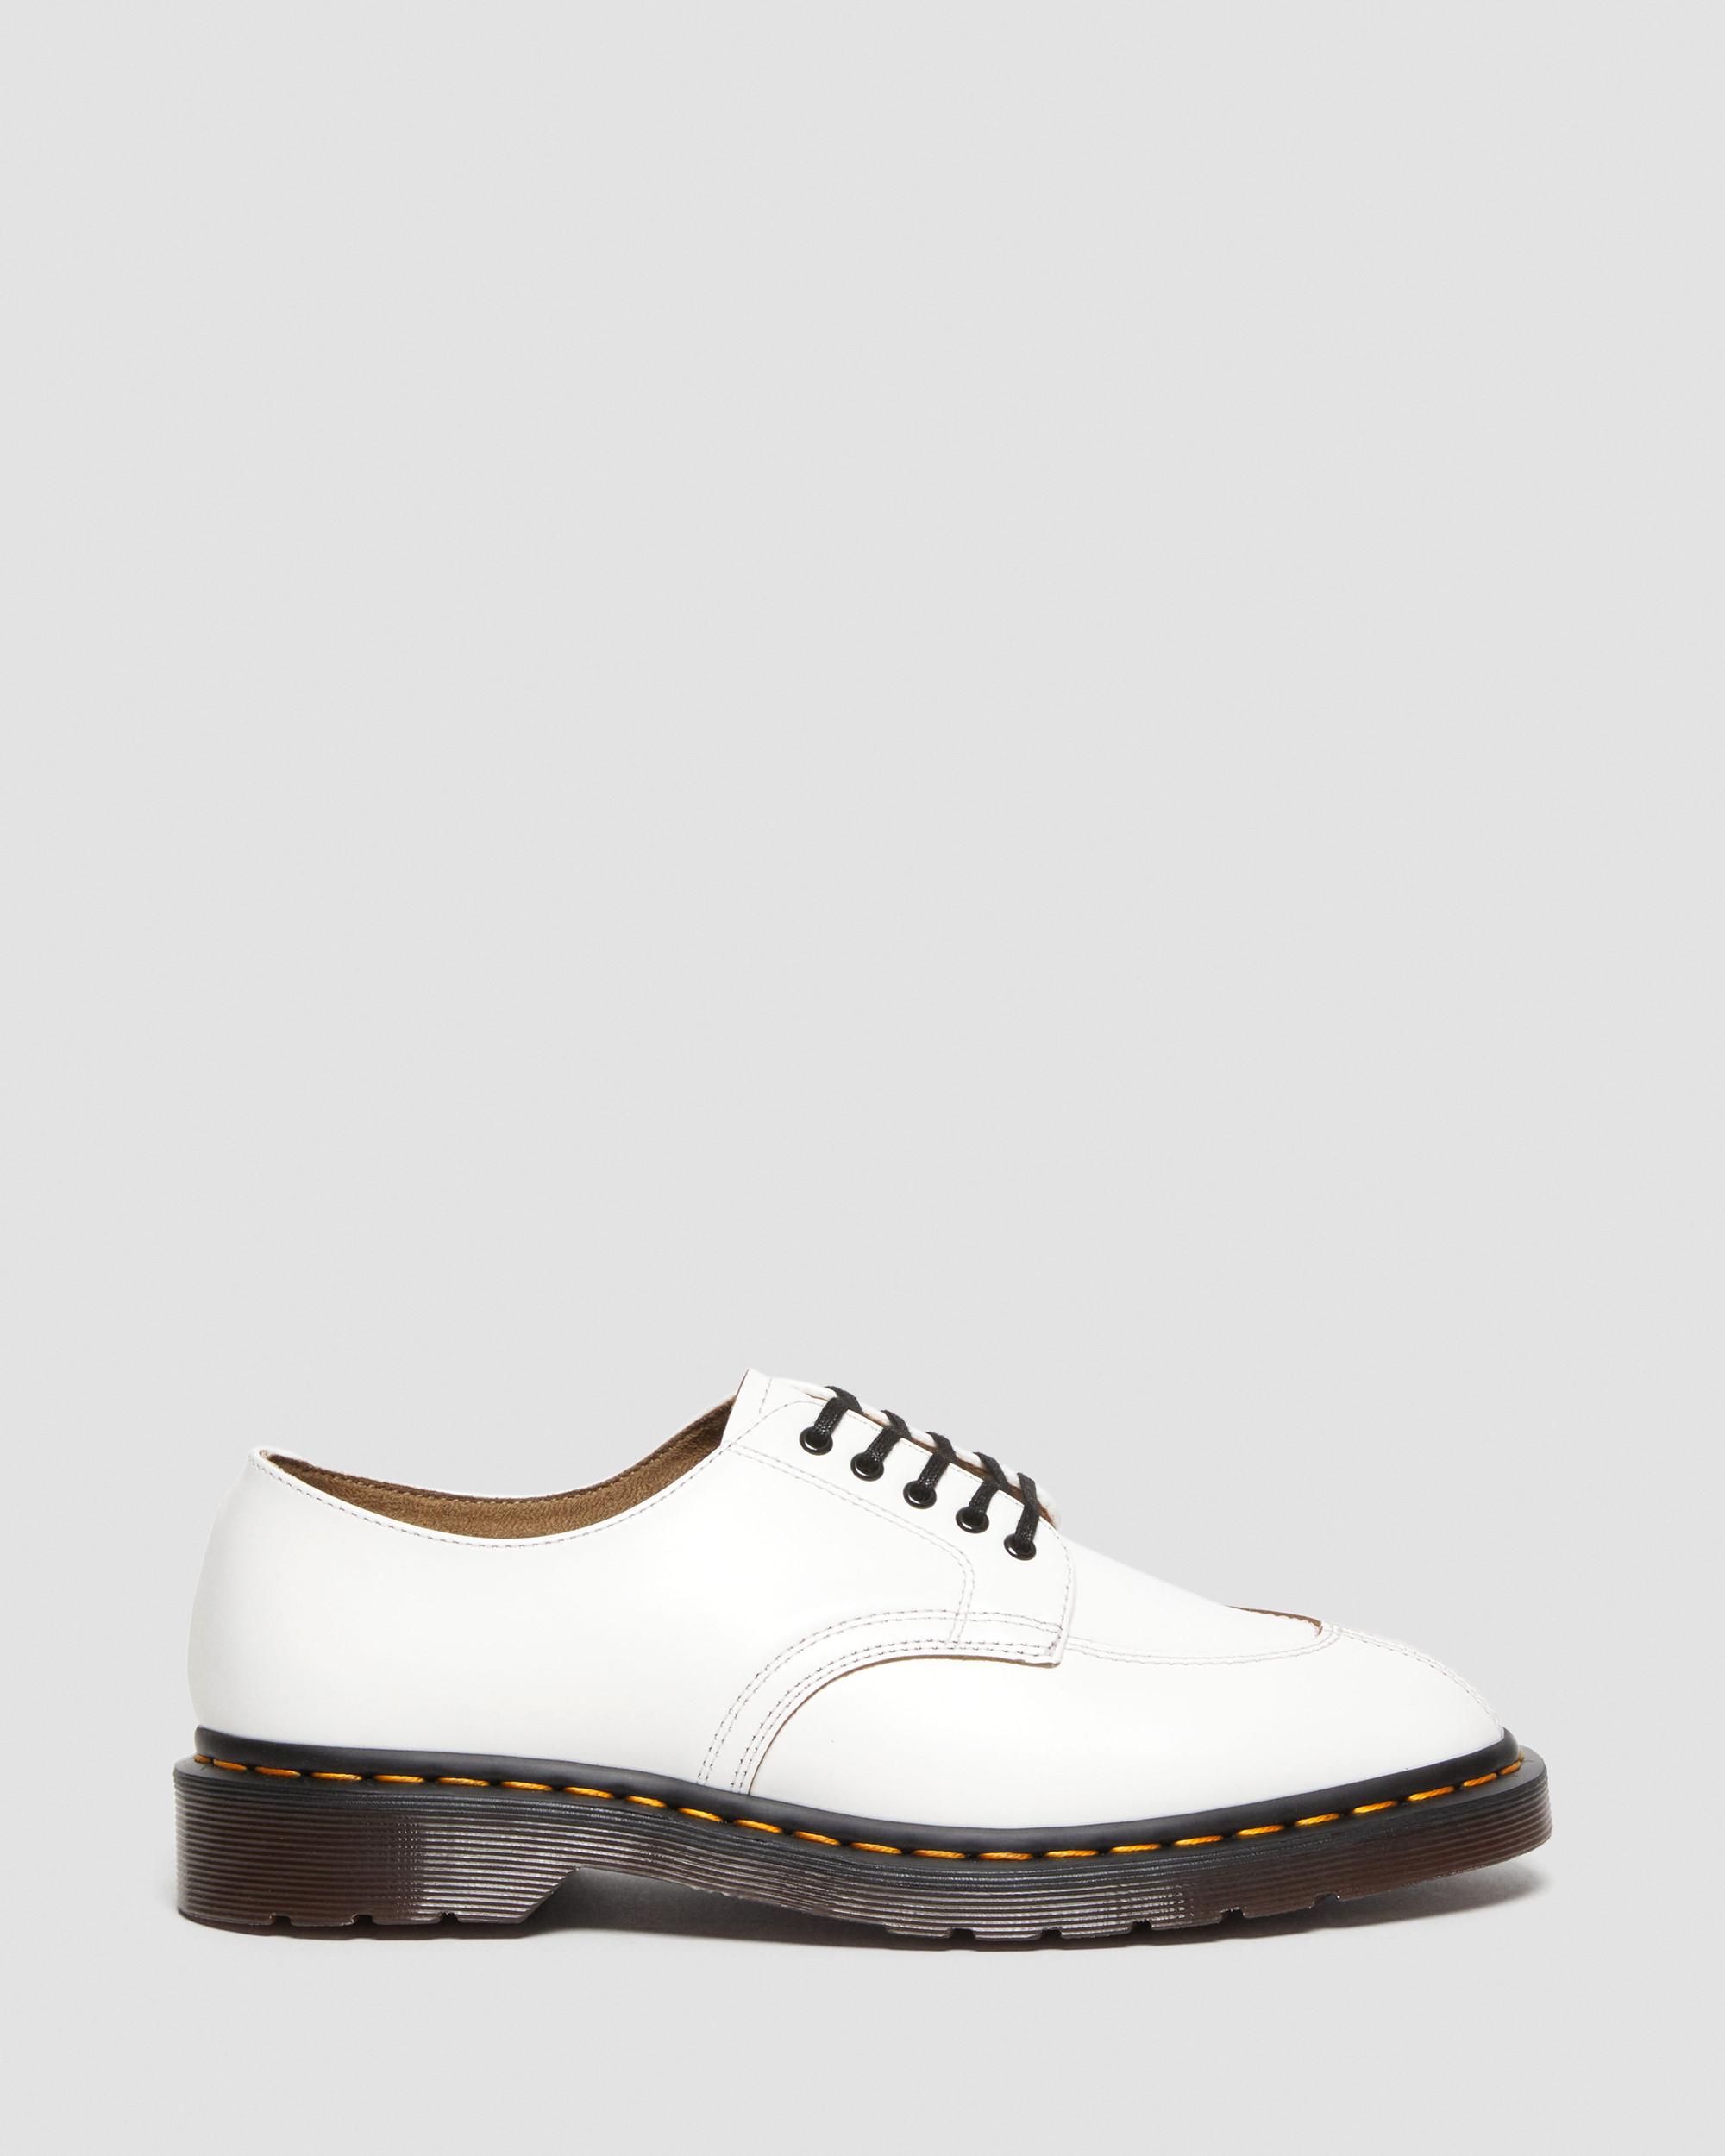 2046 Vintage Smooth Leather Oxford Shoes2046 Vintage Smooth Leren Laarzen Dr. Martens